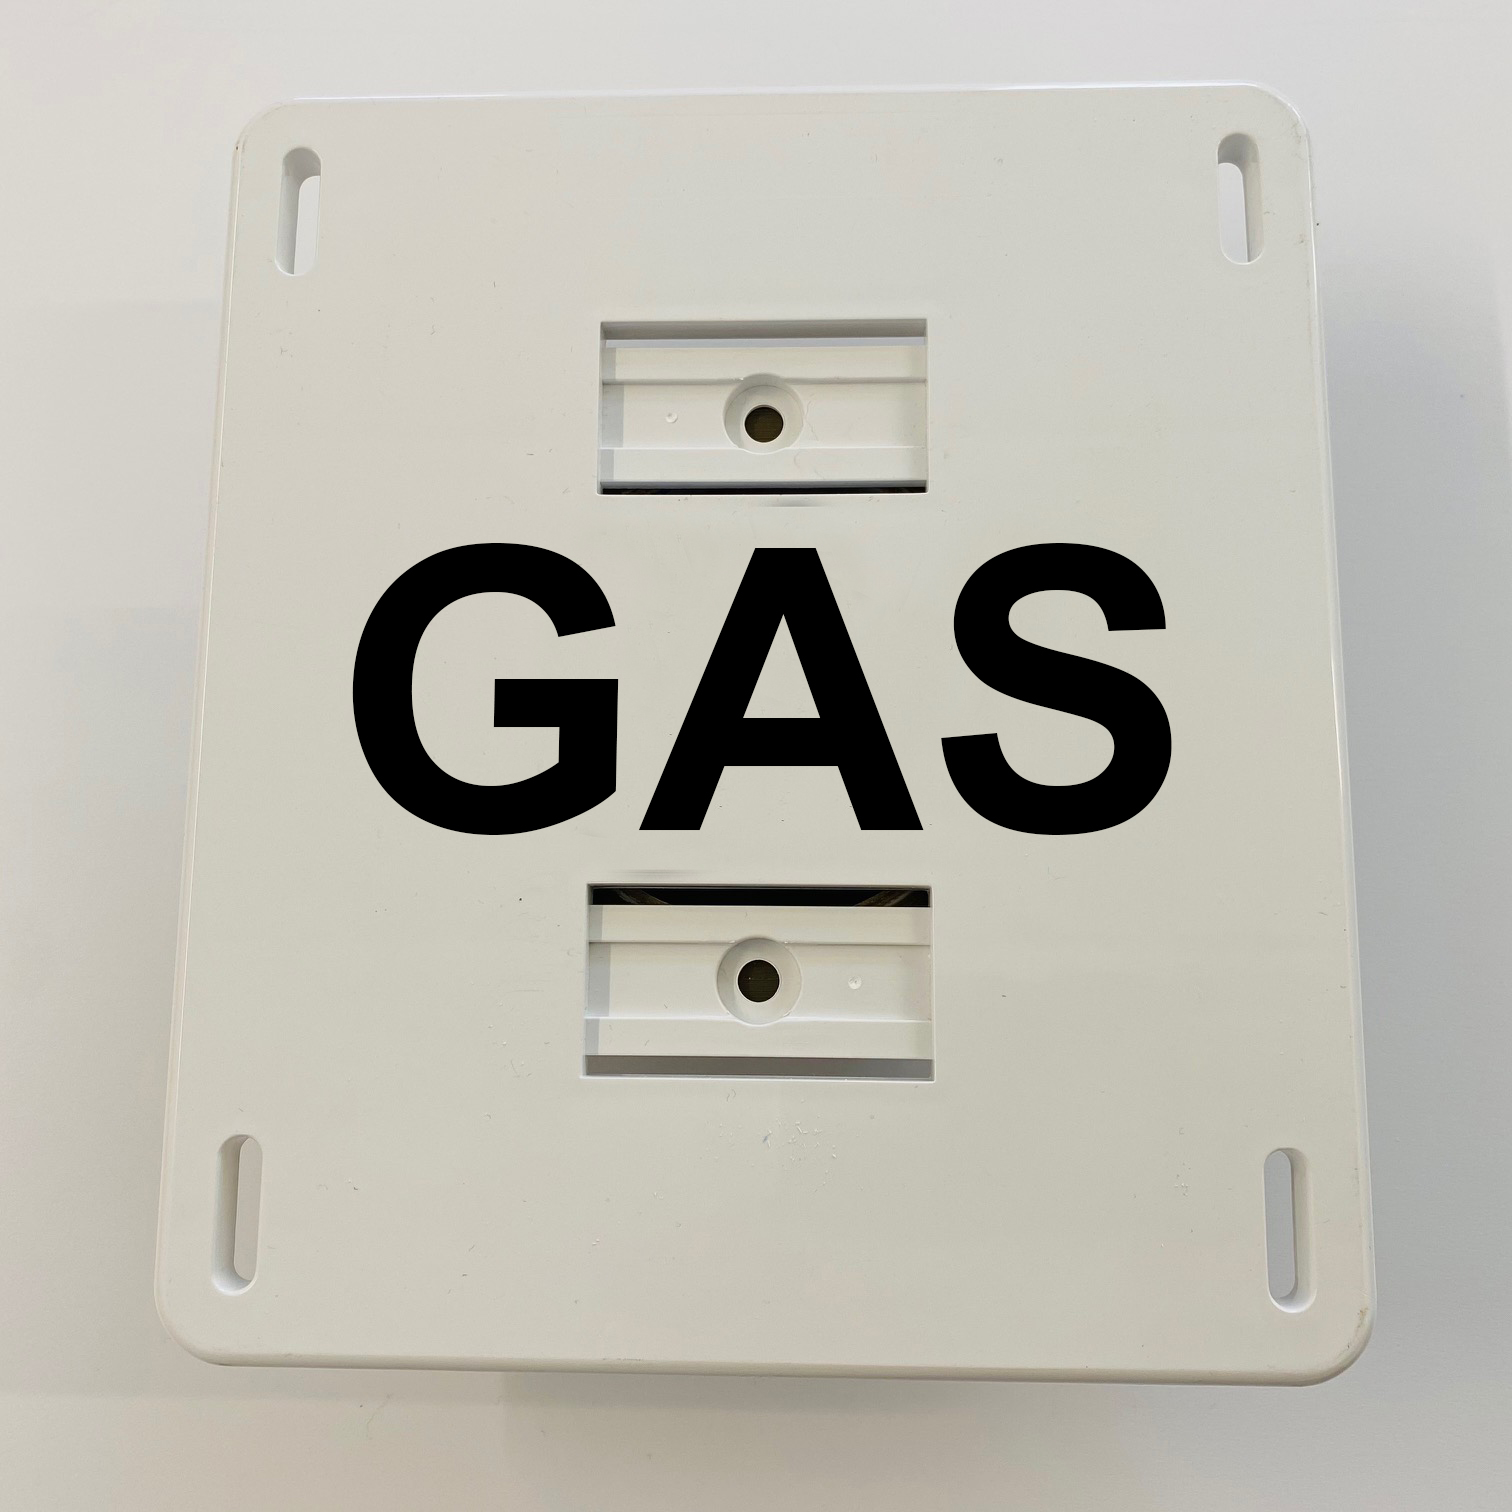 Gas Valve Sign (blank)